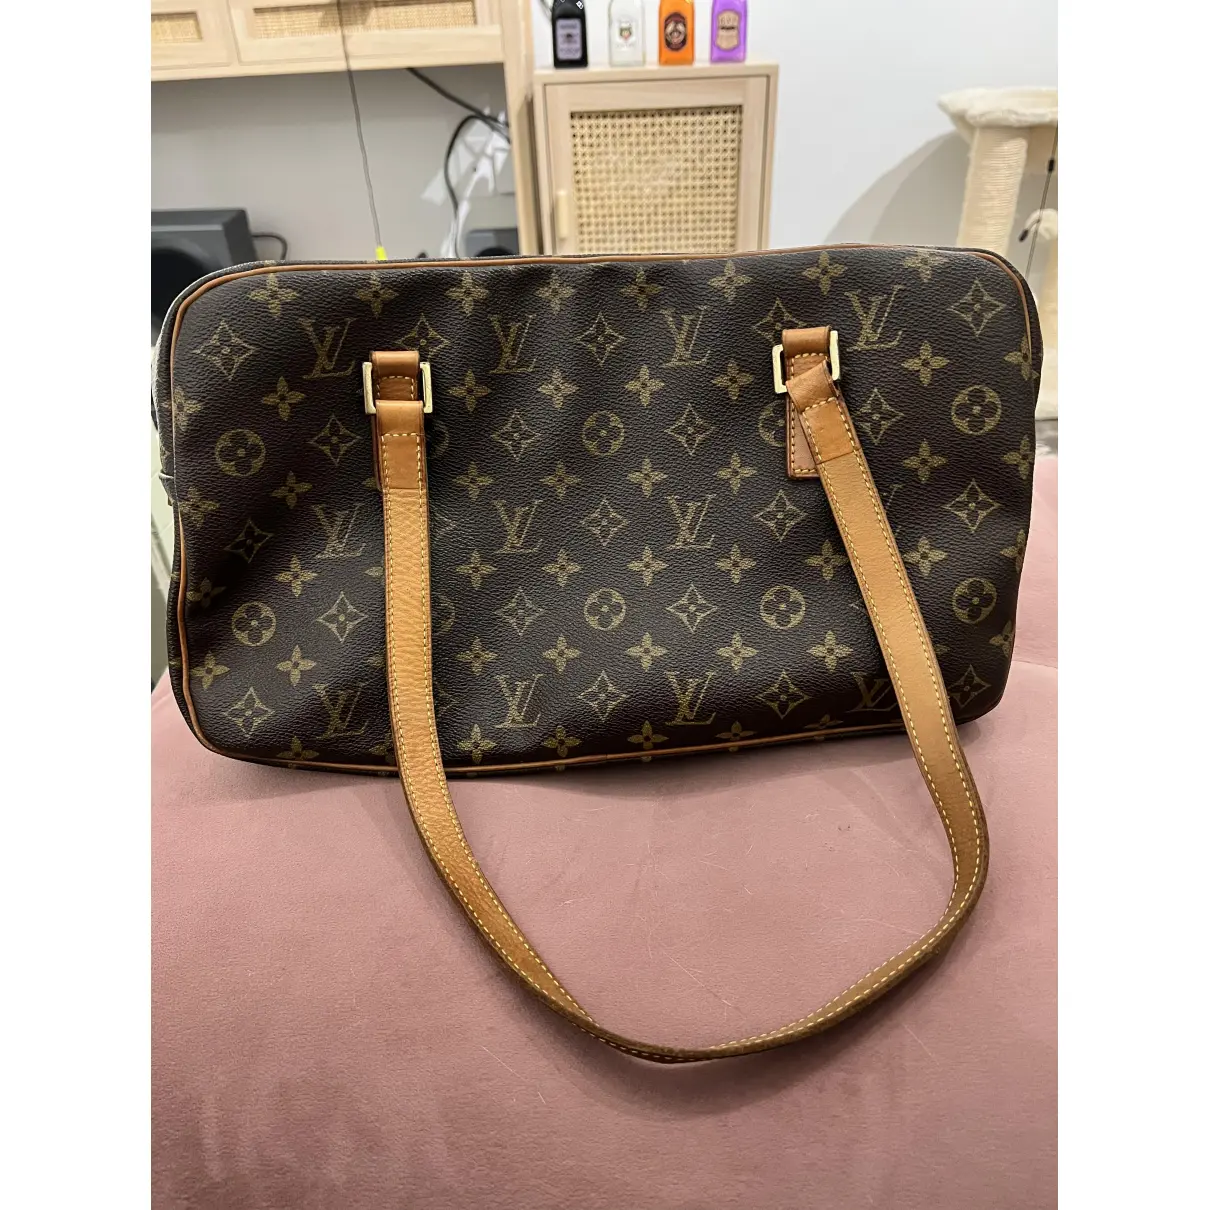 Buy Louis Vuitton Cite handbag online